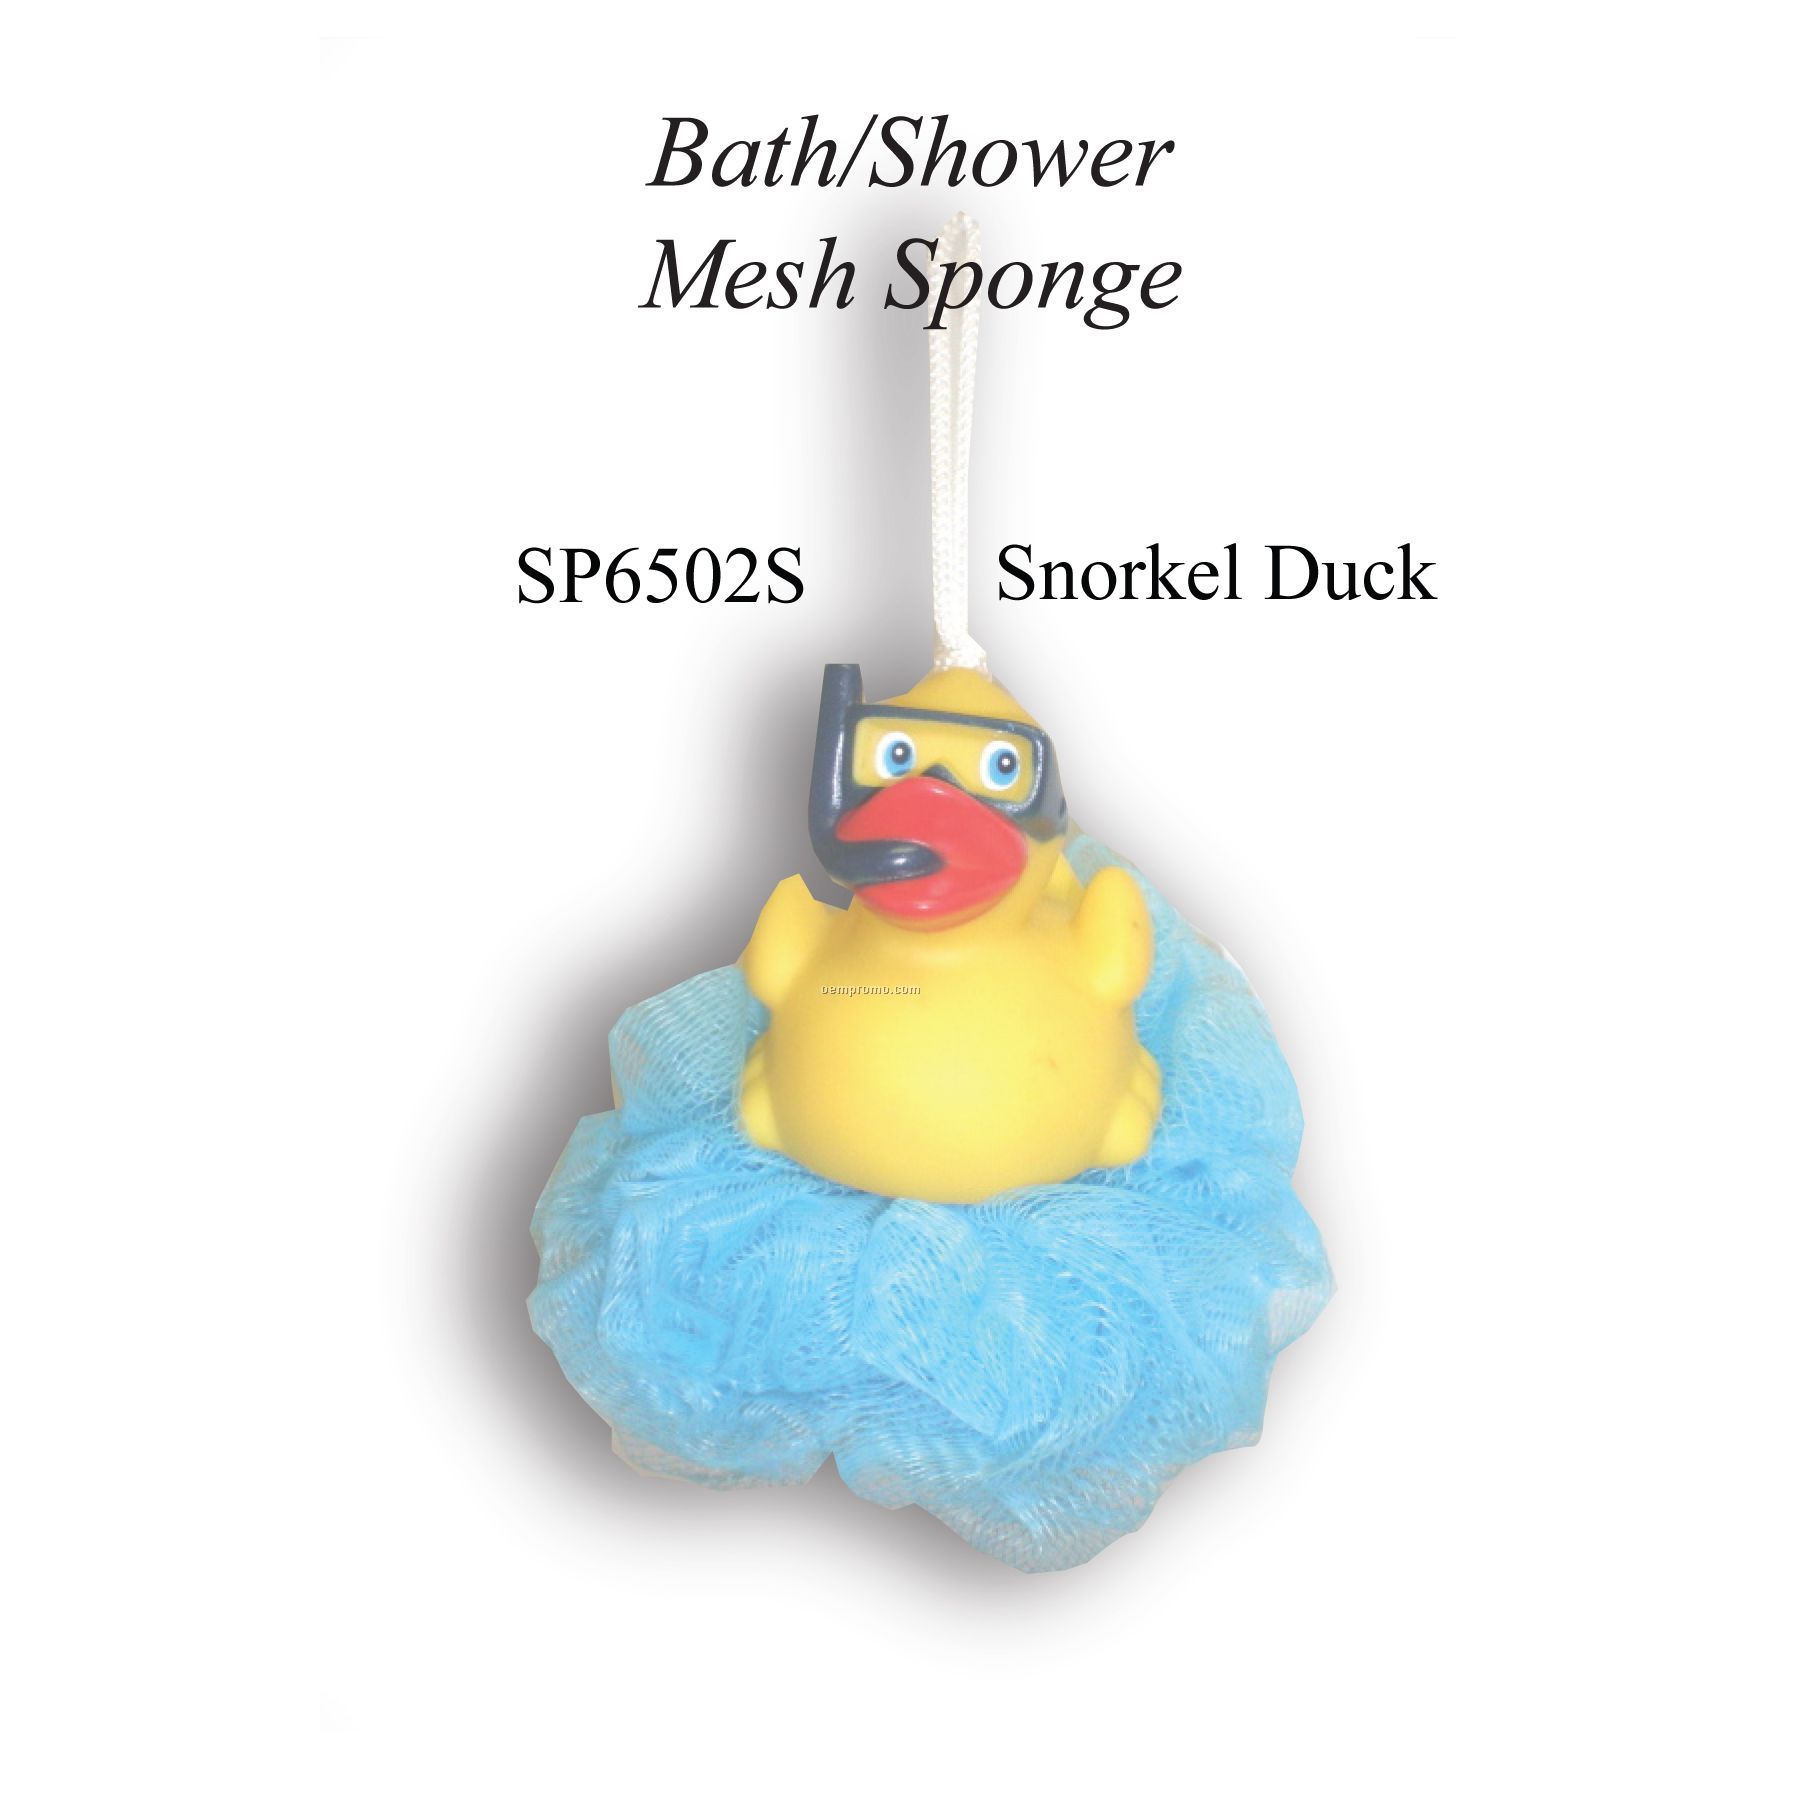 Bath / Show Sponge